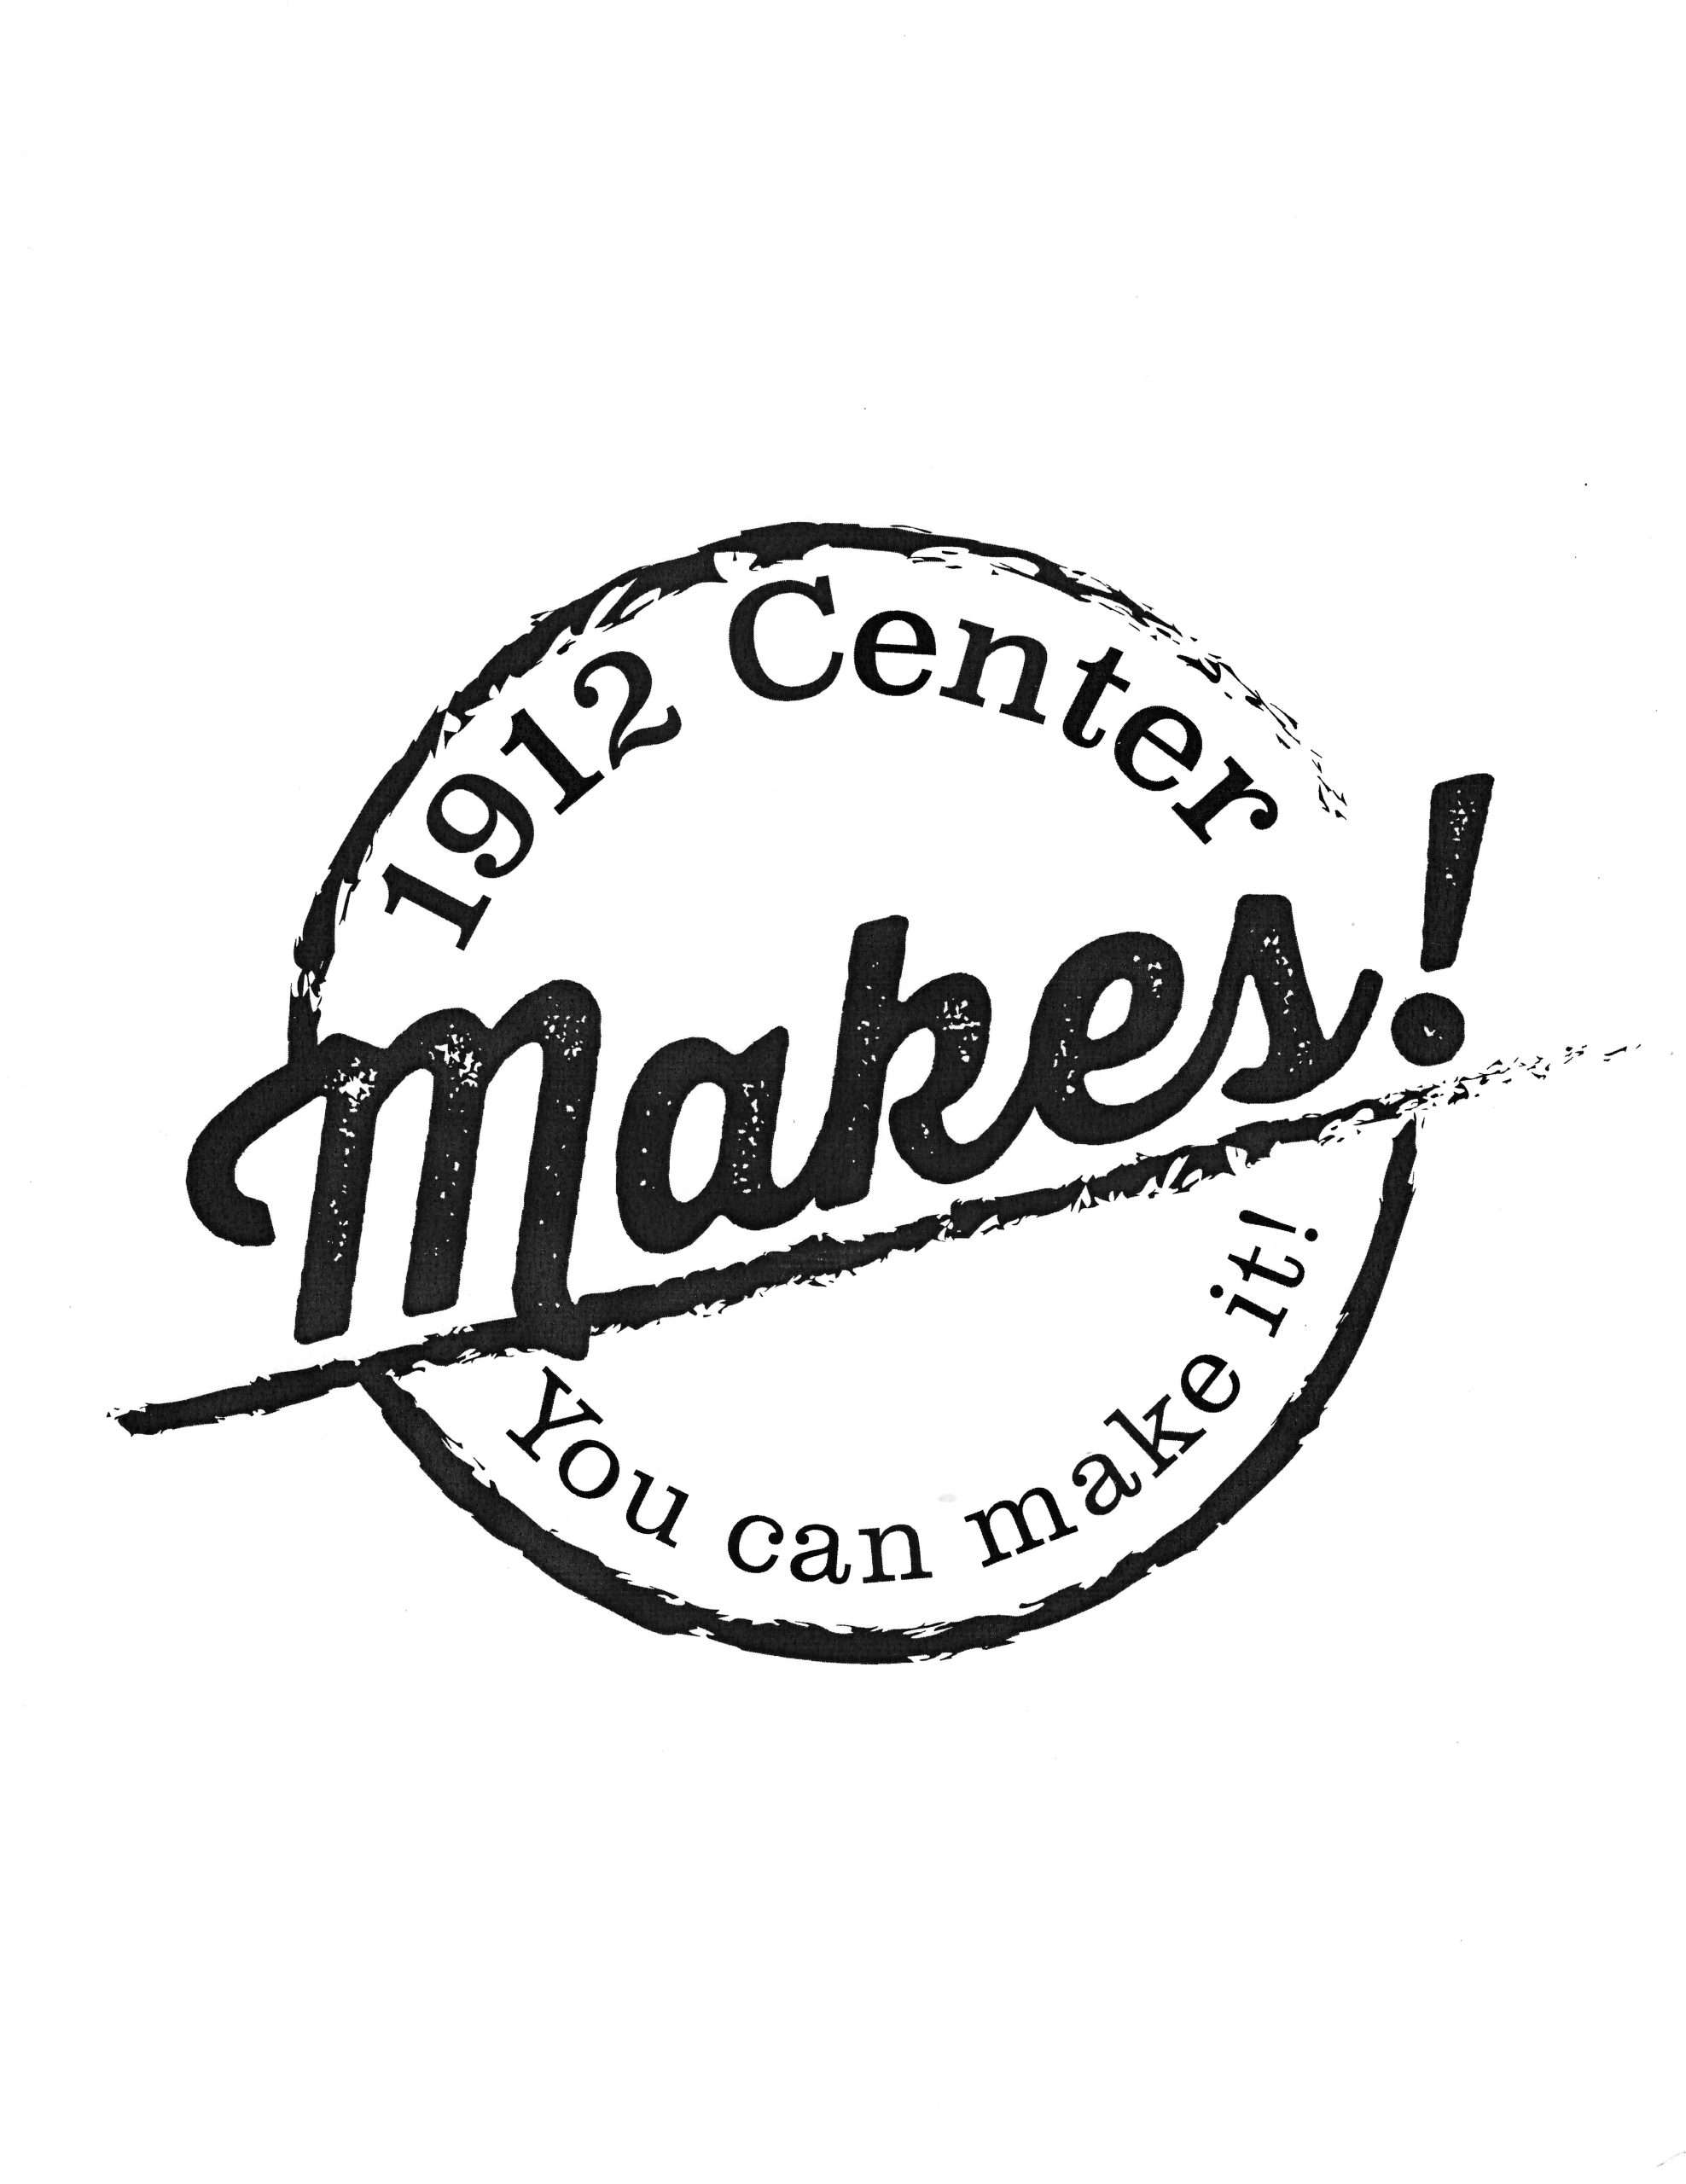 1912 Center Makes!